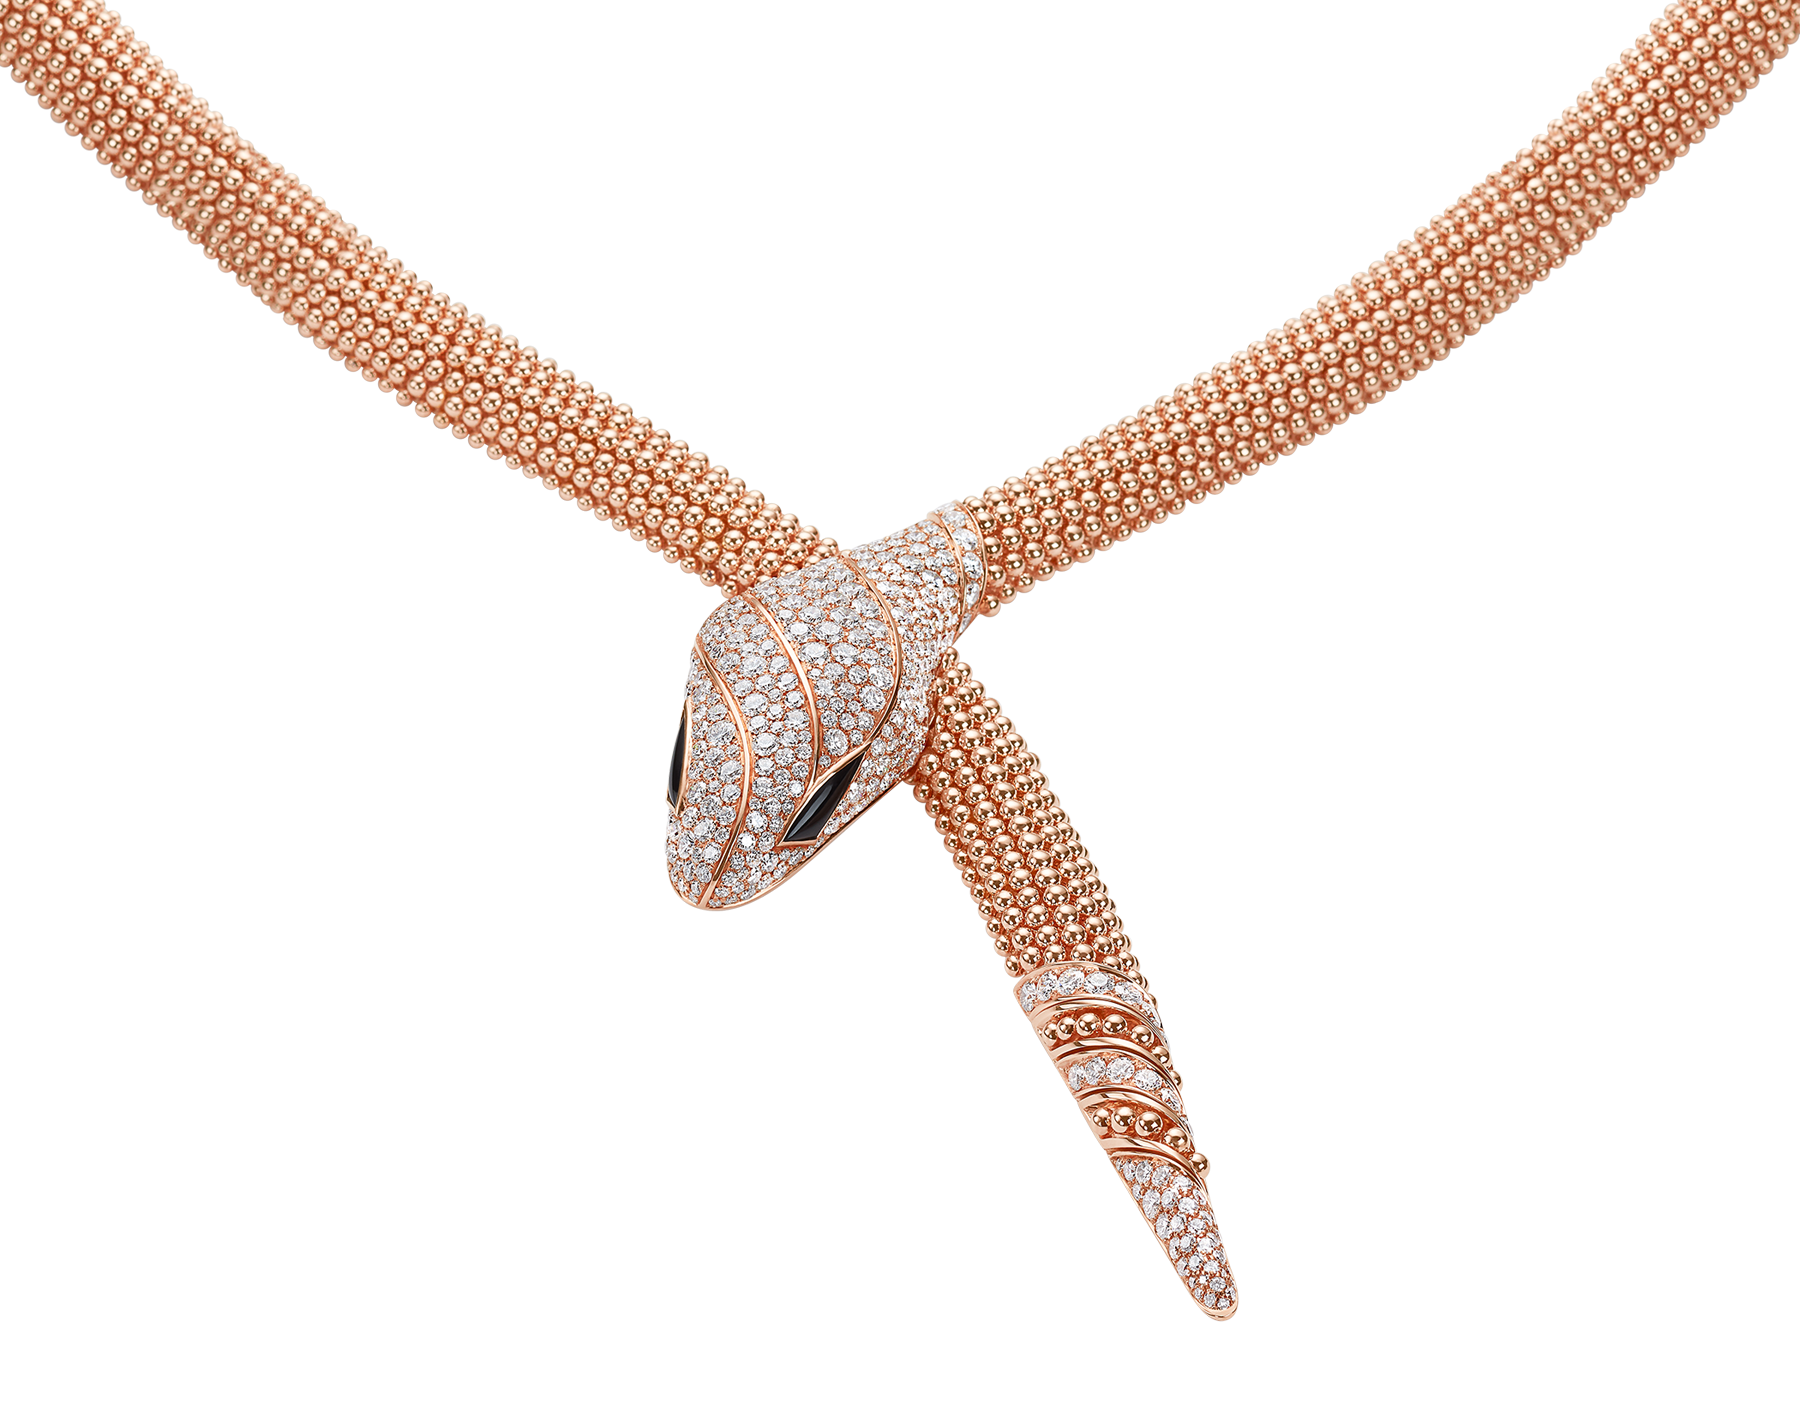 Bulgari serpenti necklace